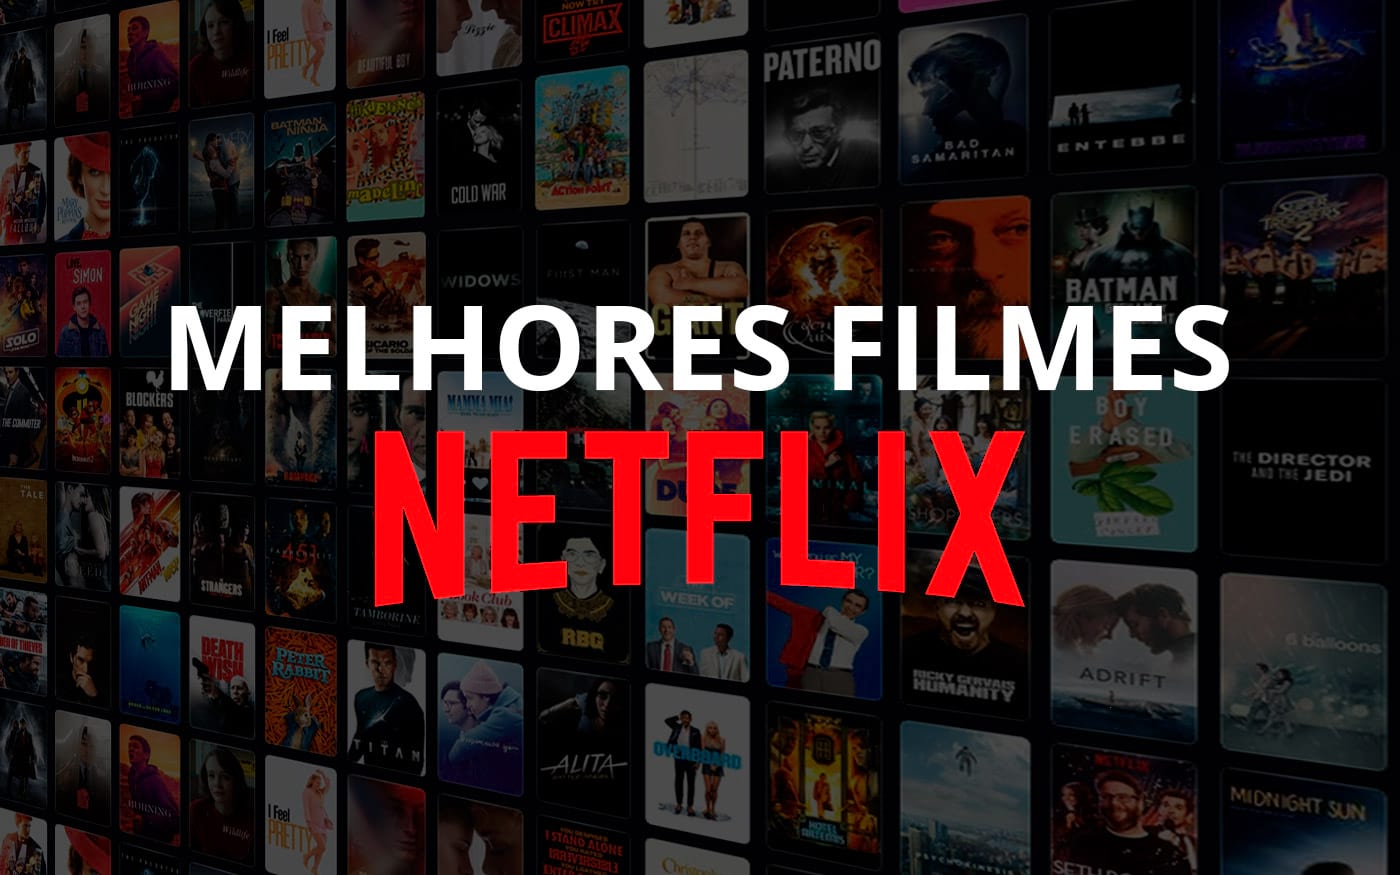 Poziom Honorowy Enommium Filmes Bons Para Assistir Na Netflix 2019 